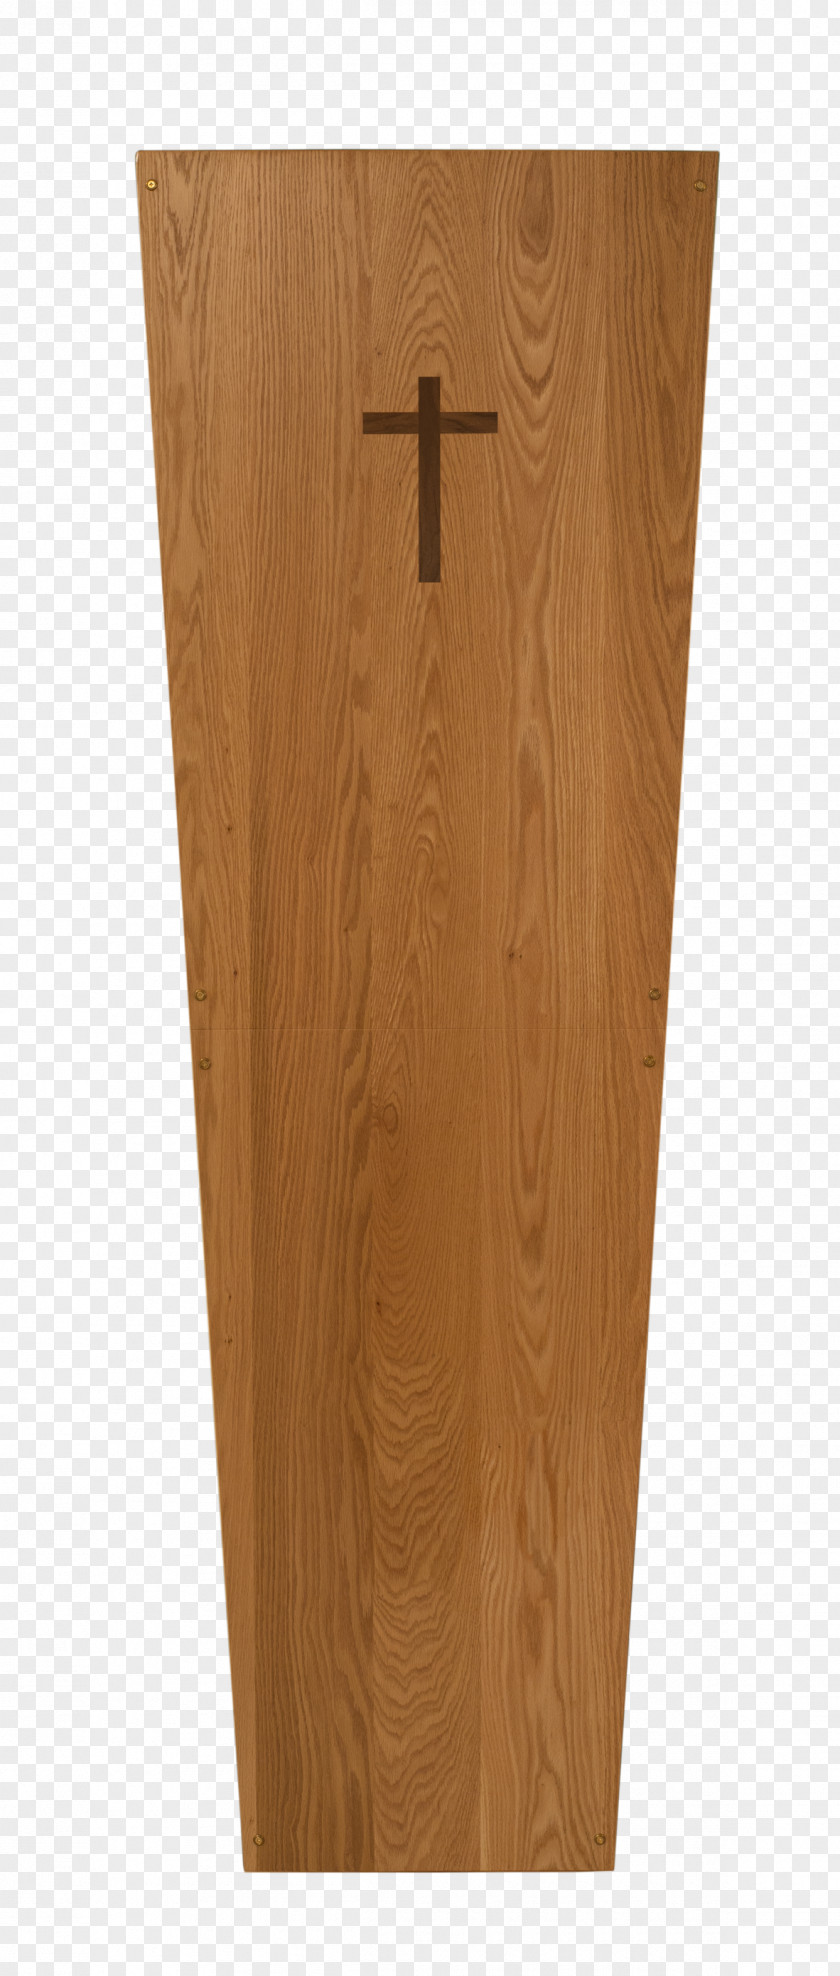 Oak Wood Stain Varnish Hardwood Plywood PNG